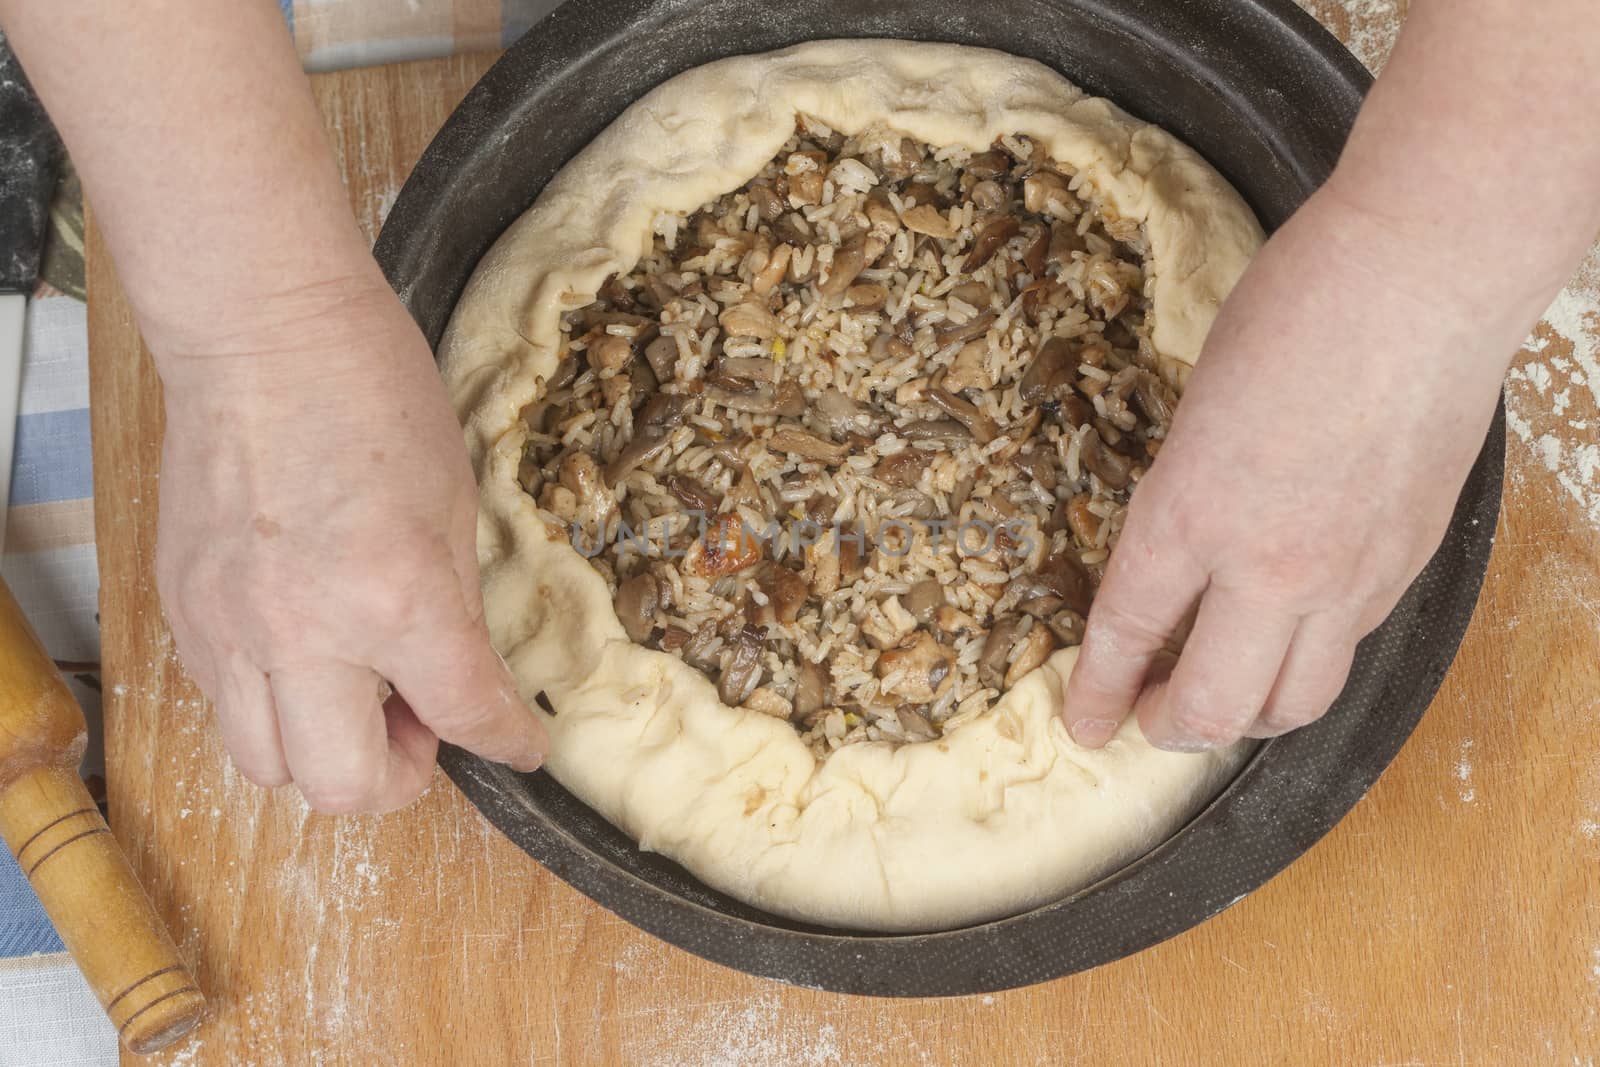 Putting filling on raw dough by kozak